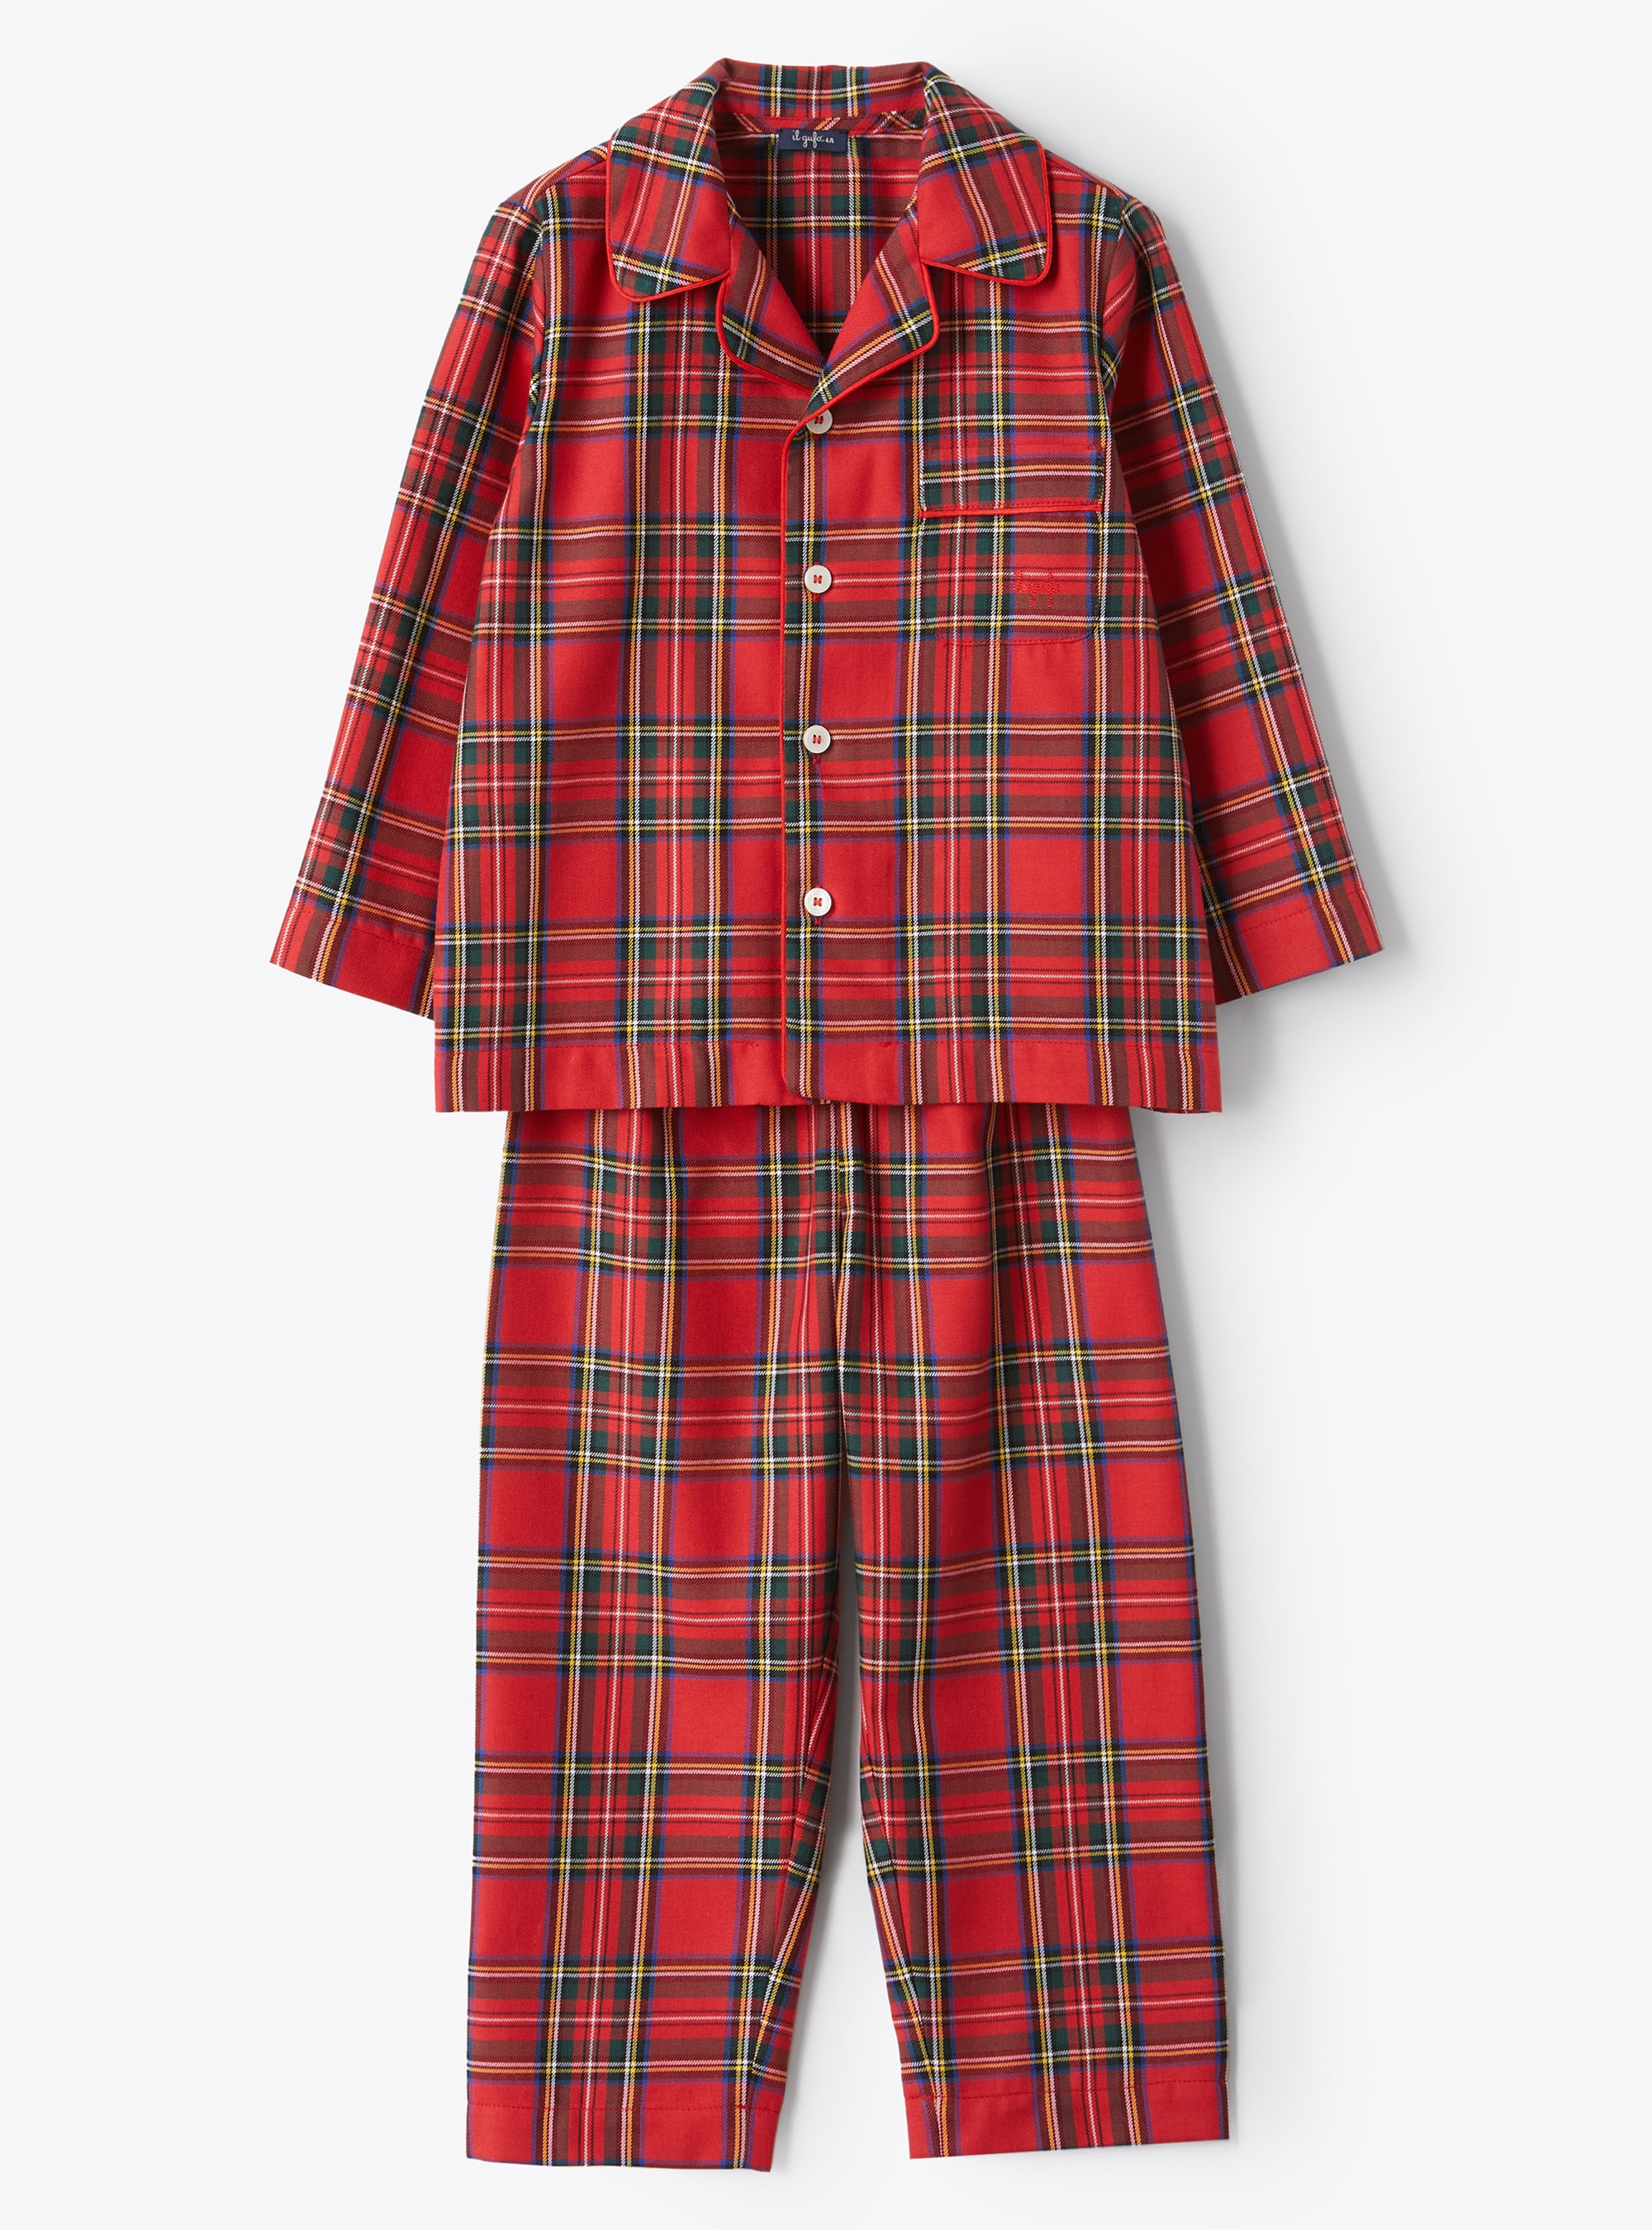 Boys' tartan check pyjamas - Accessories - Il Gufo